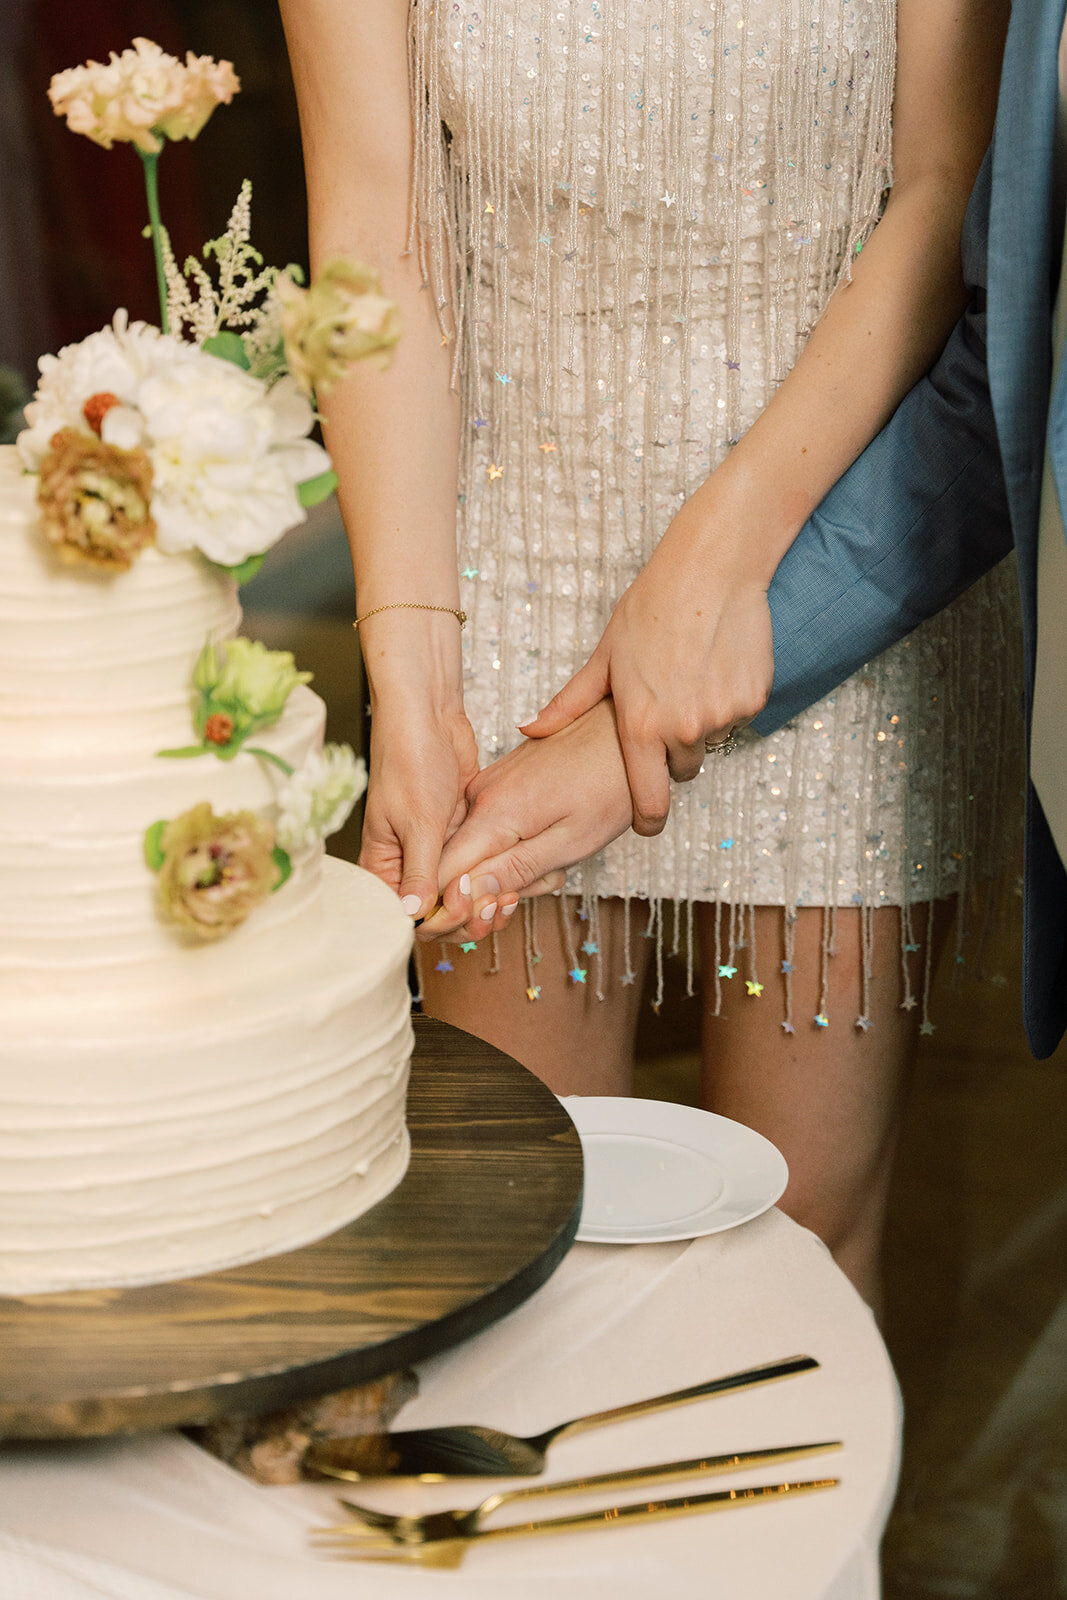 Cake cutting in bride’s sparkly tassel reception dress.